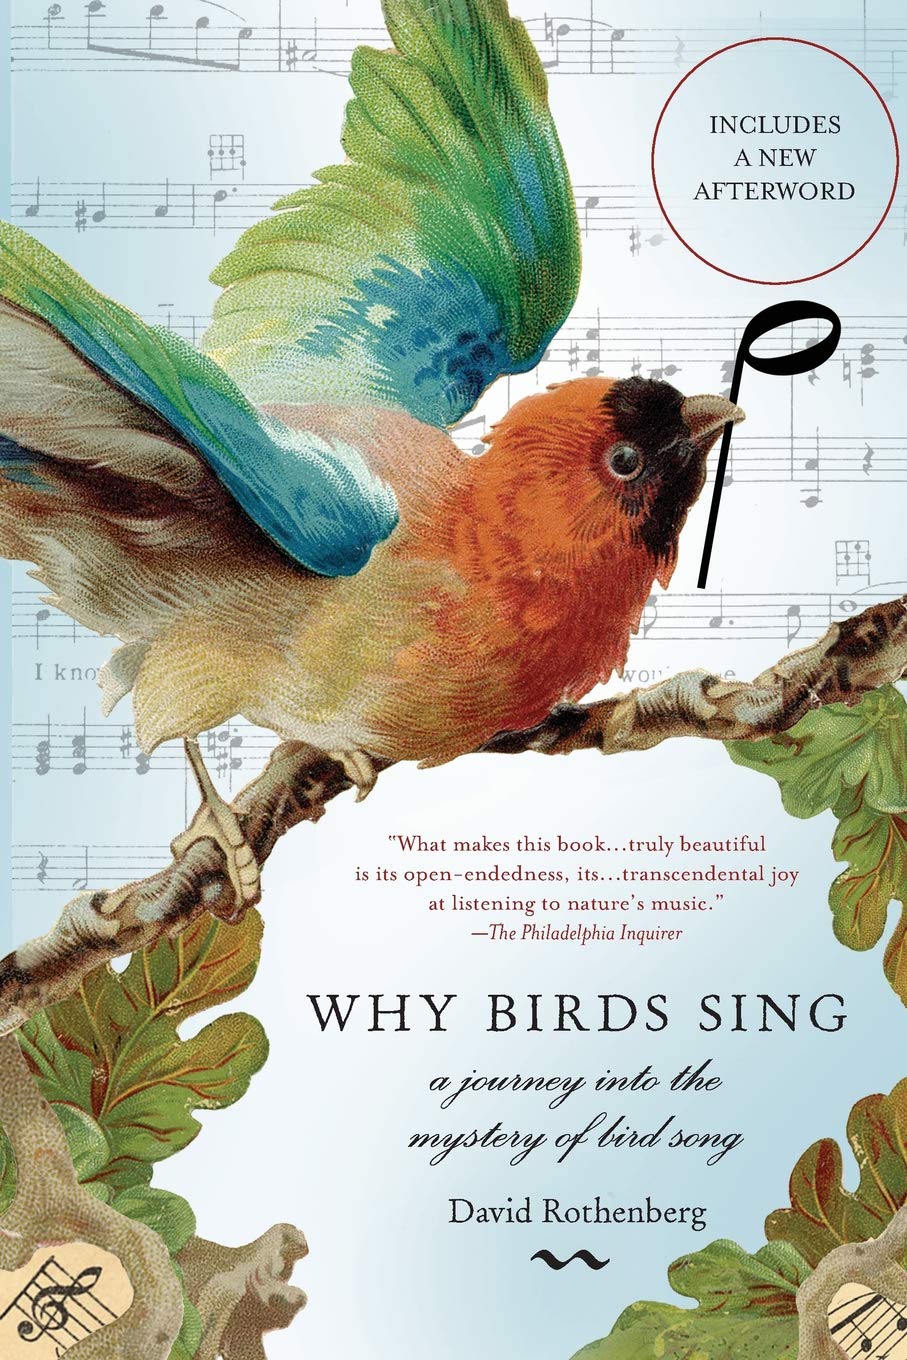 Why birds sing